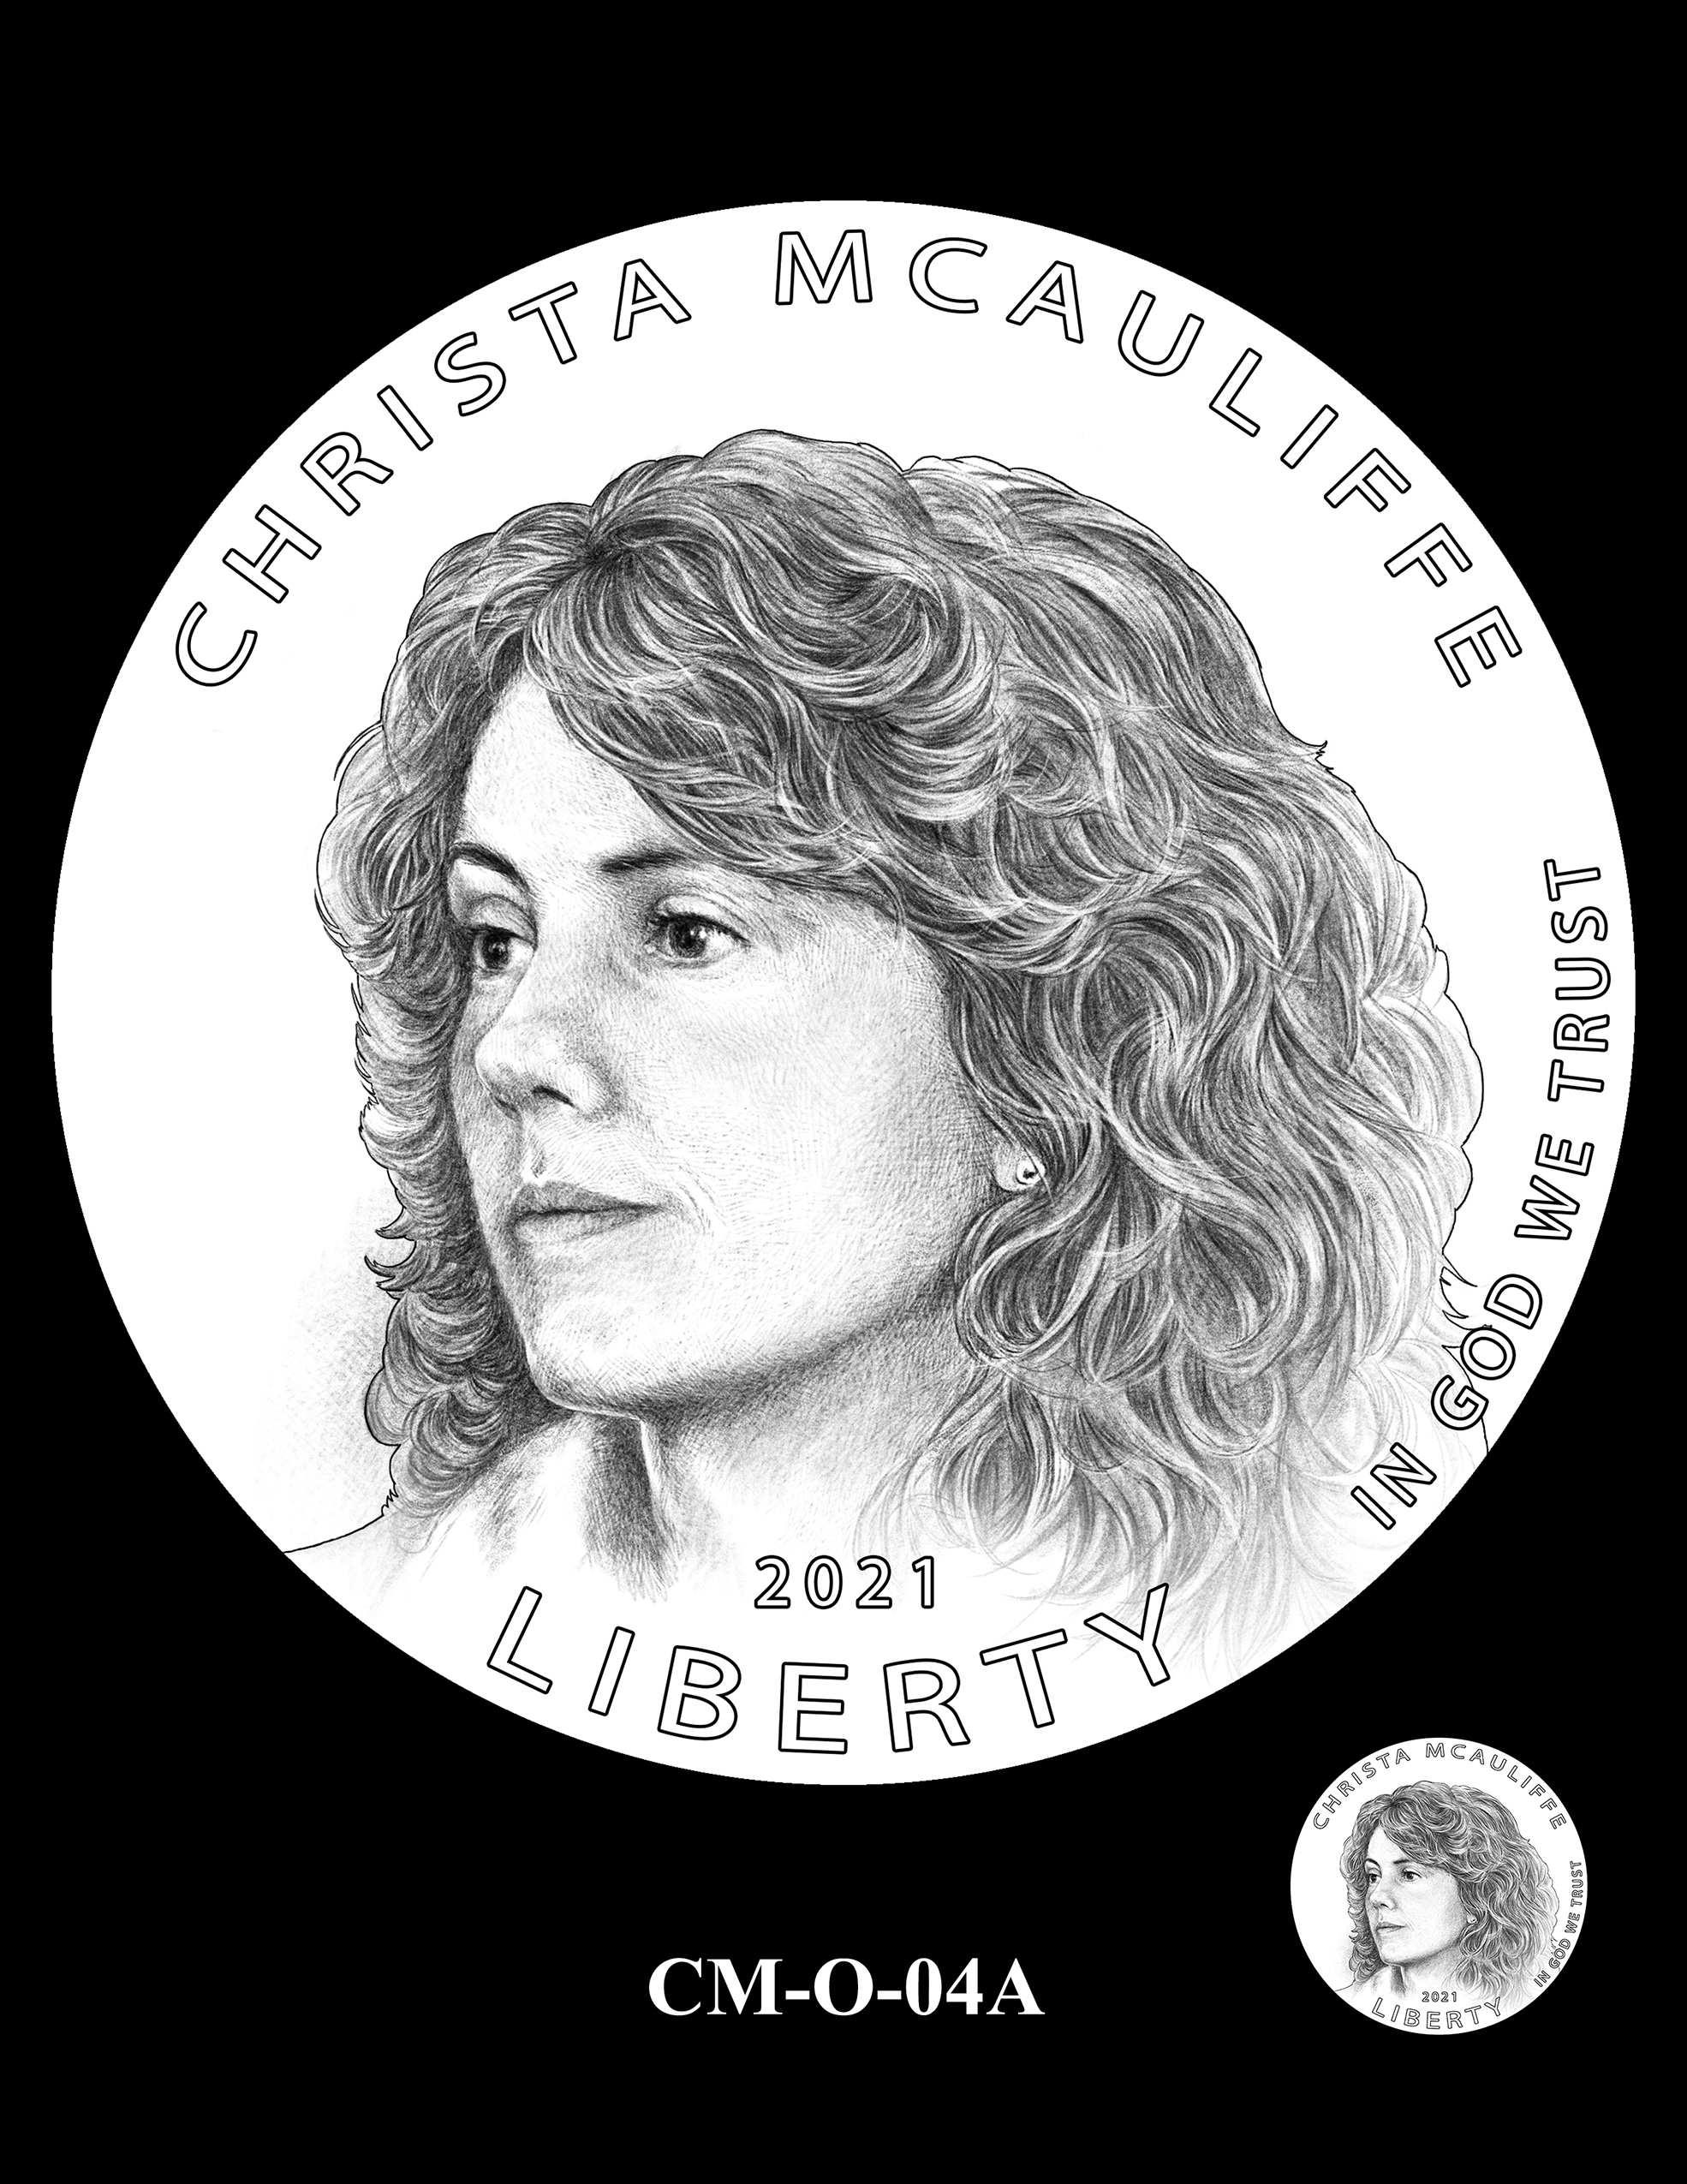 CM-O-04A -- 2021 Christa McAuliffe Commemorative Coin